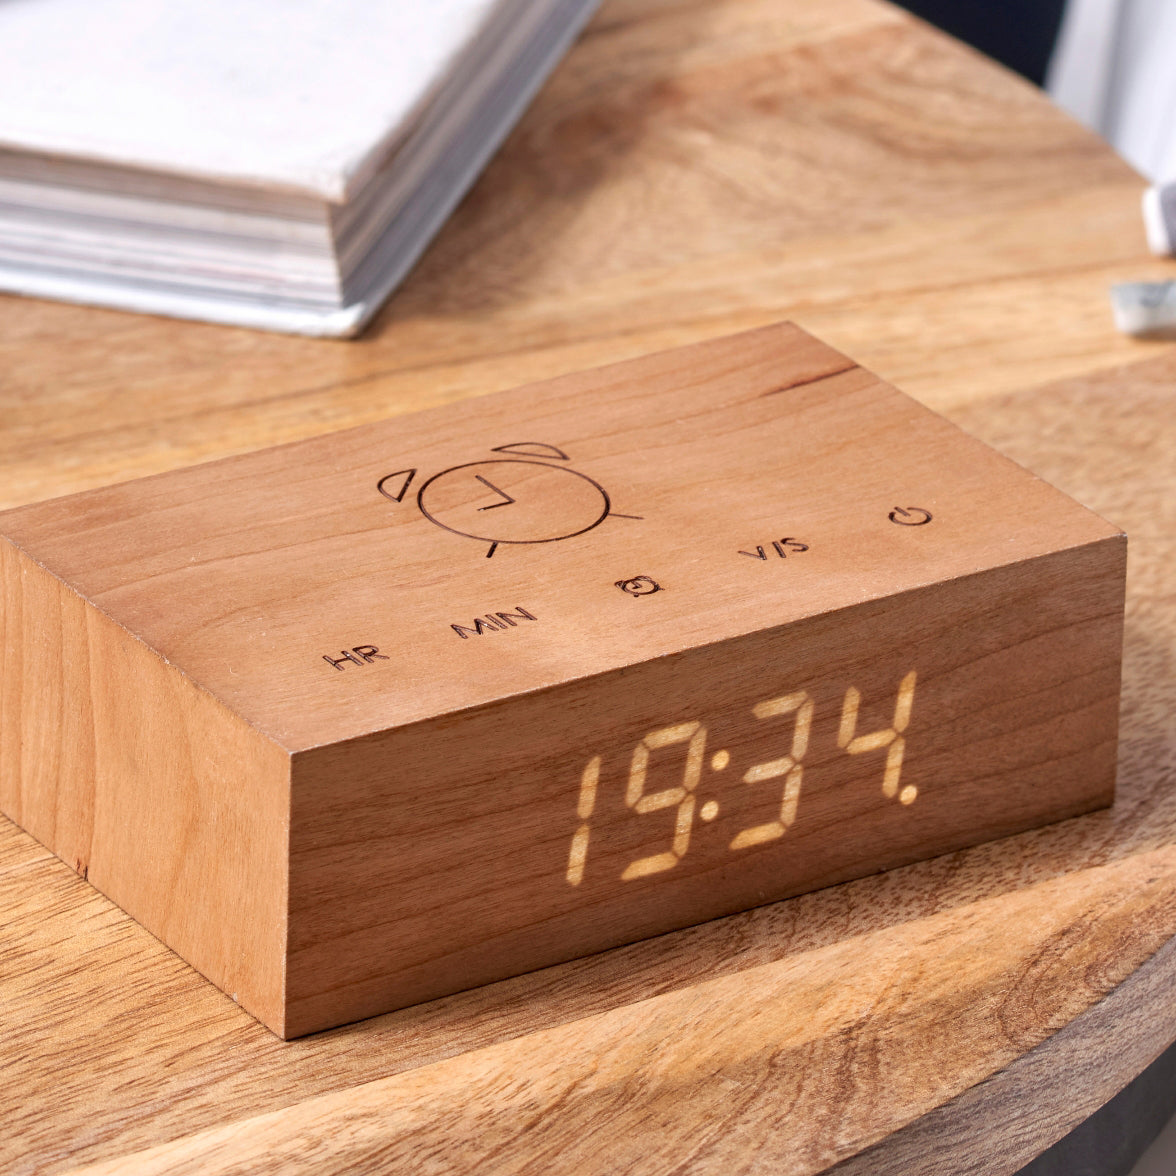 FLIP Alarm Clock in cherry wood